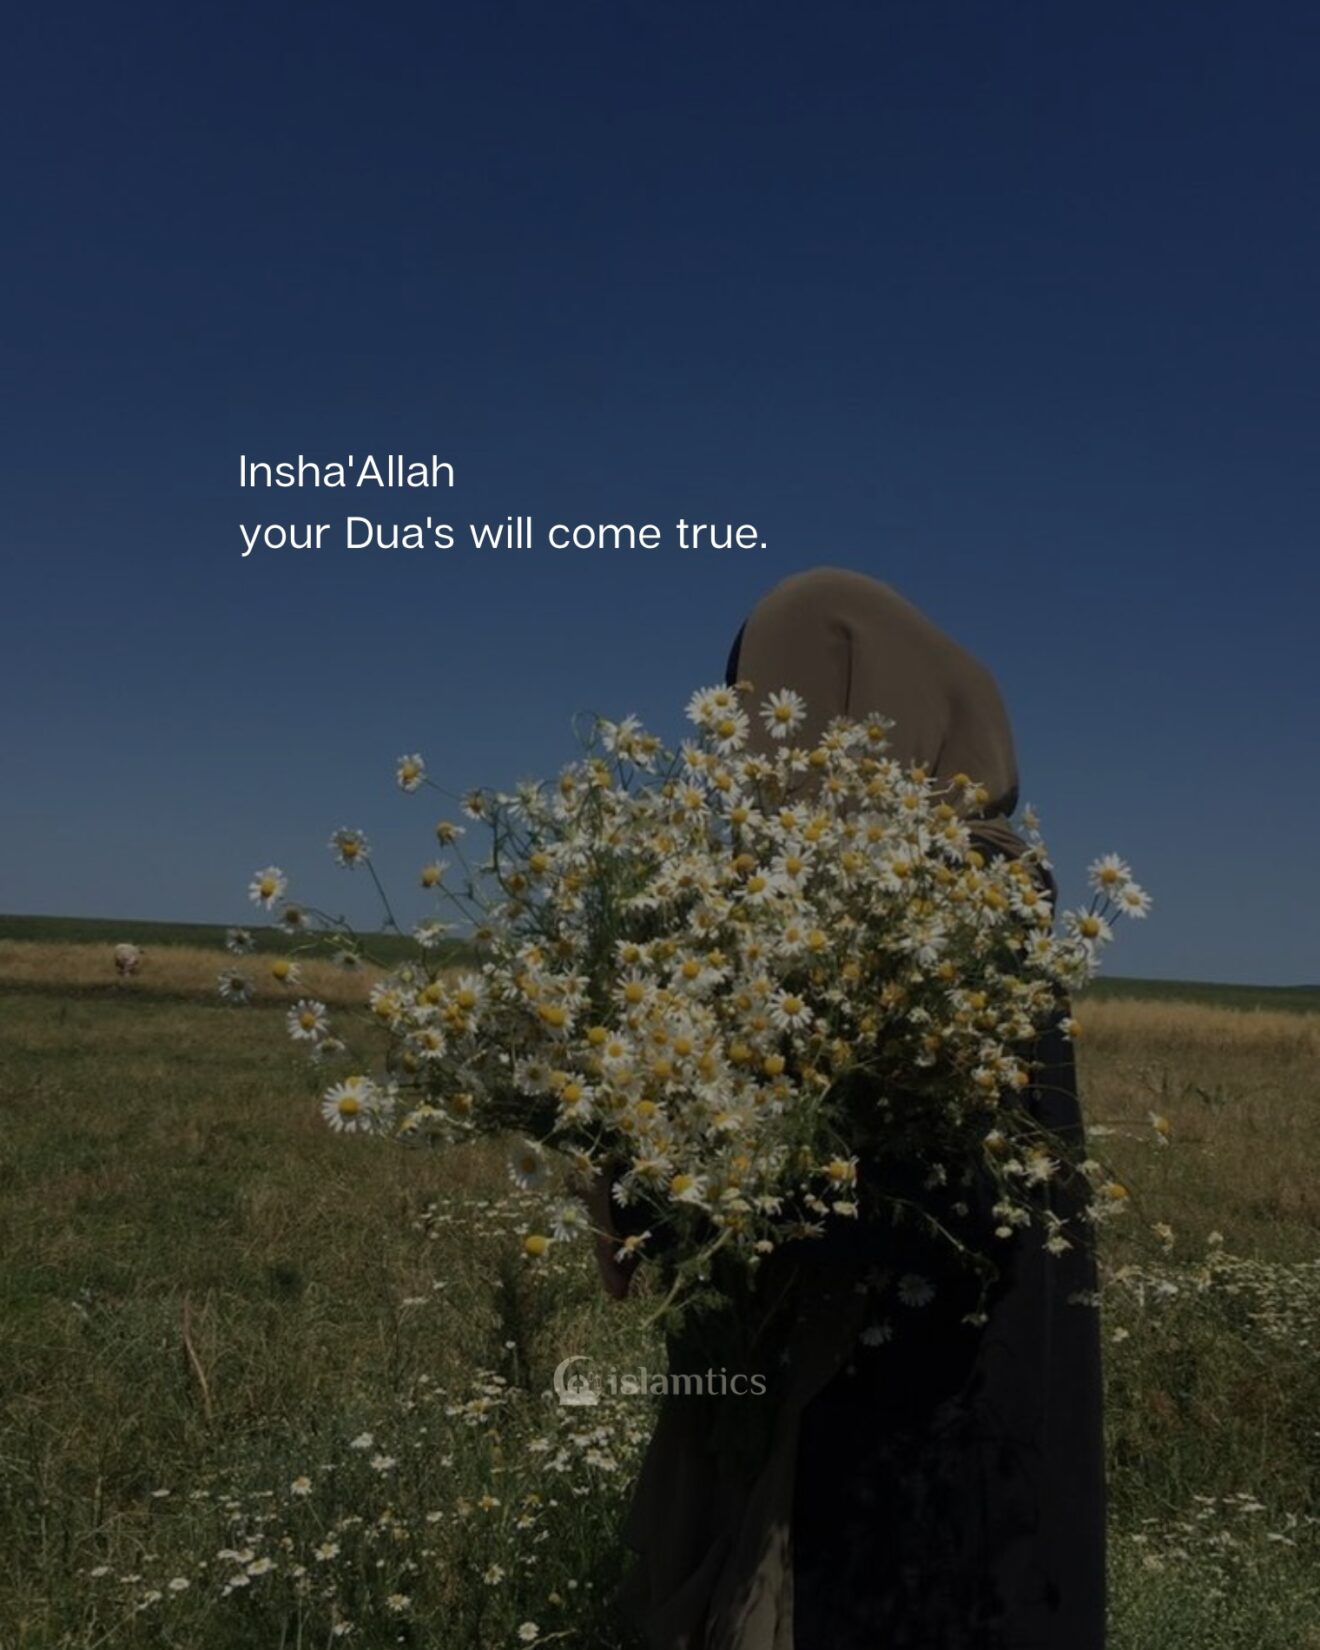  Insha’Allah your Dua’s will come true.